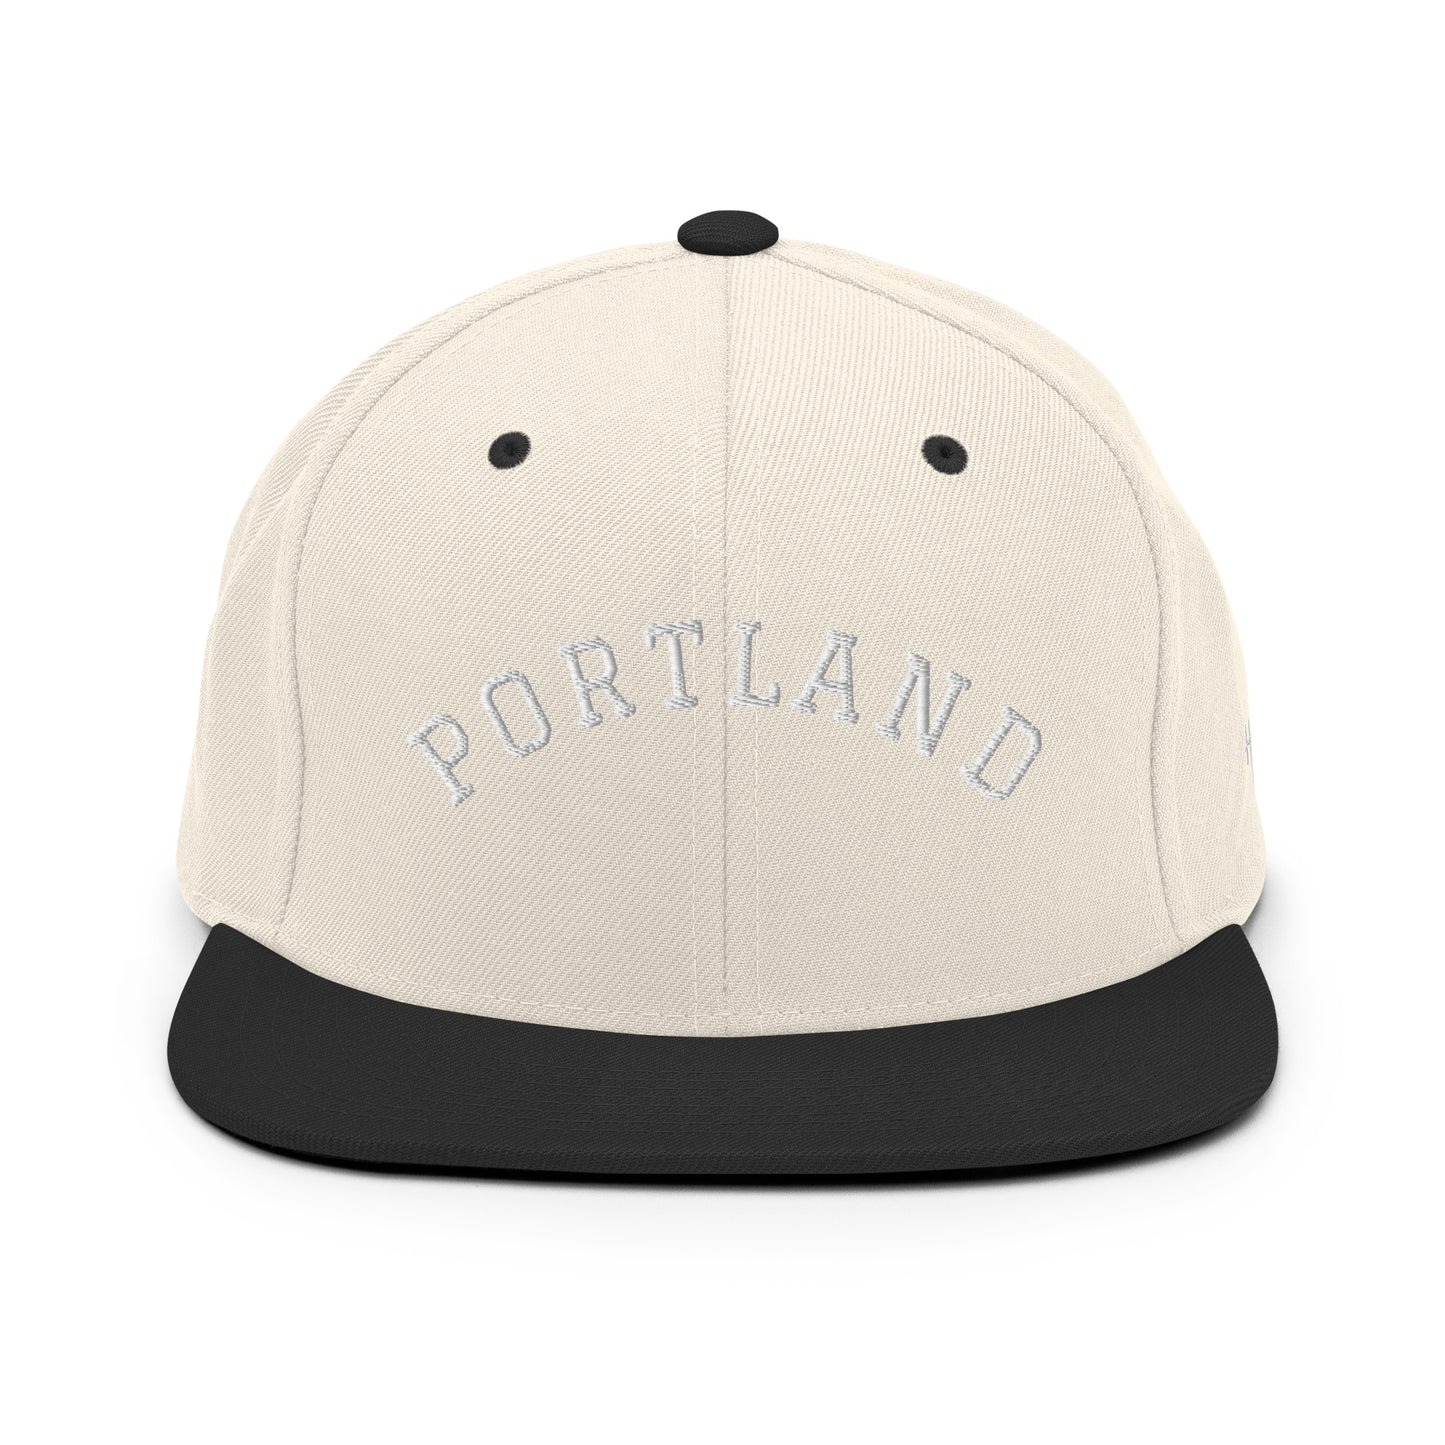 Portland Arch 6 Panel Snapback Hat